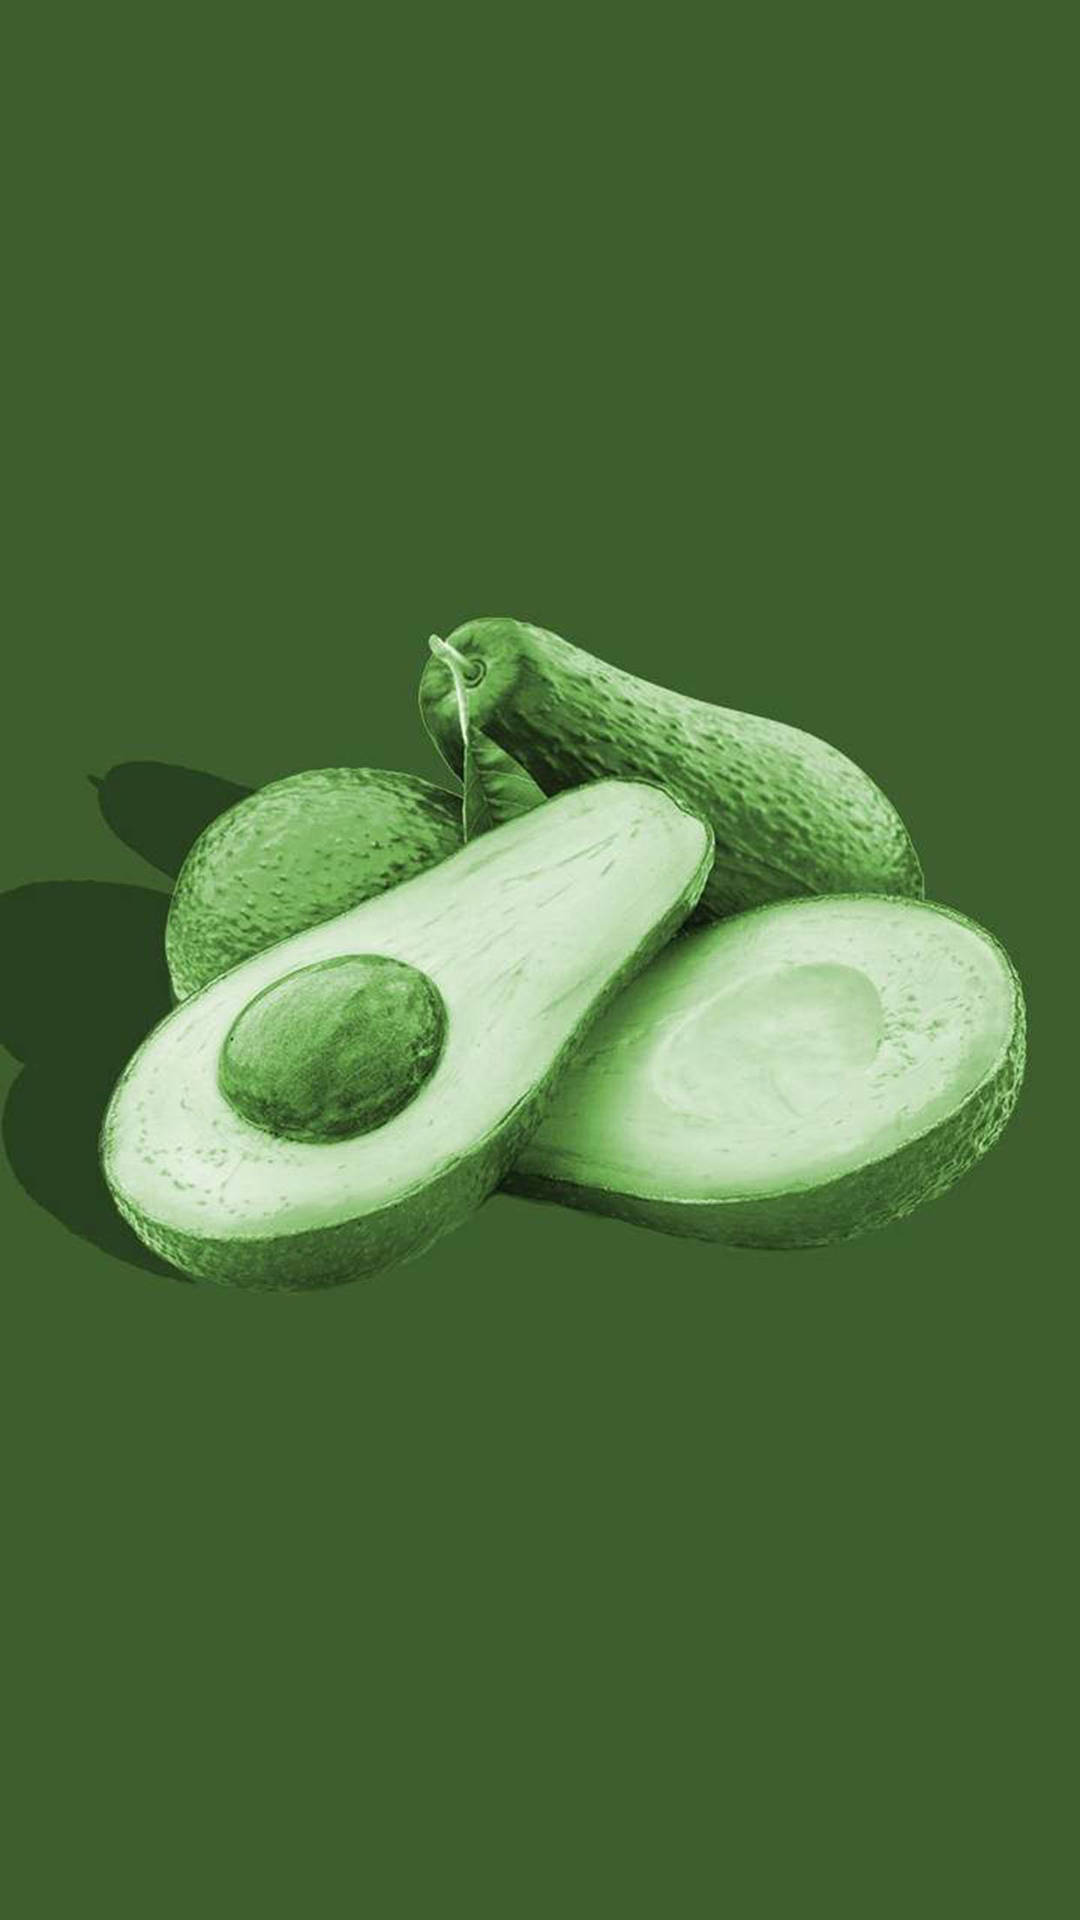 Avocado Fruits Minimalist Android Wallpaper